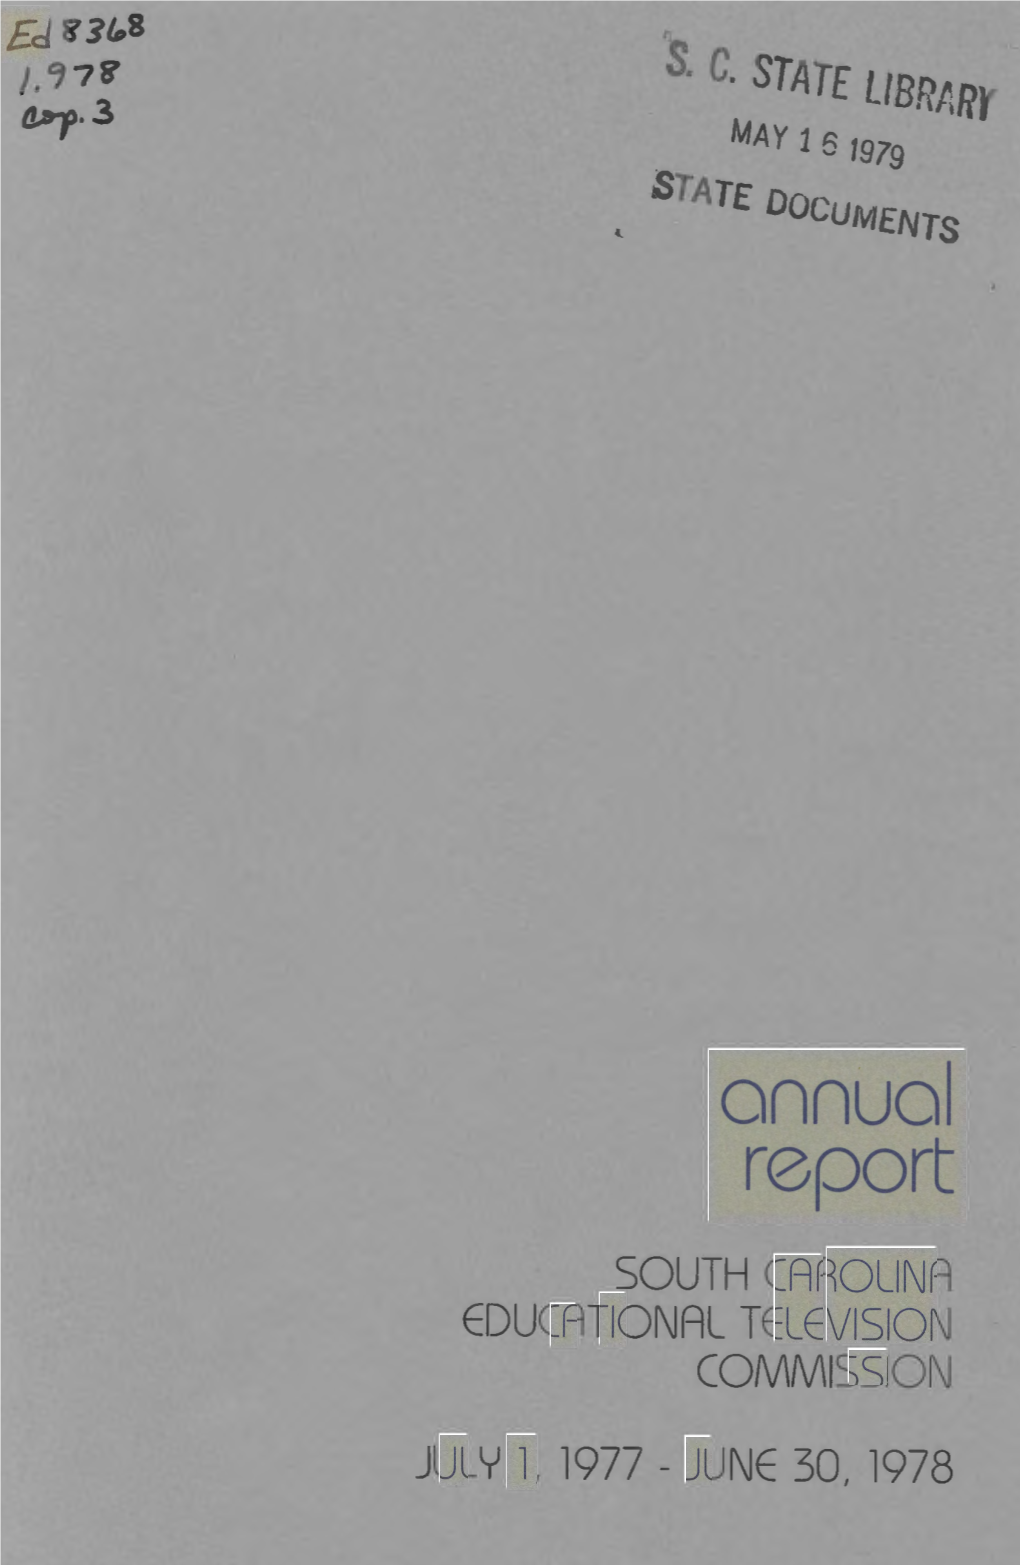 ETV Annual Report 1977-1978.Pdf